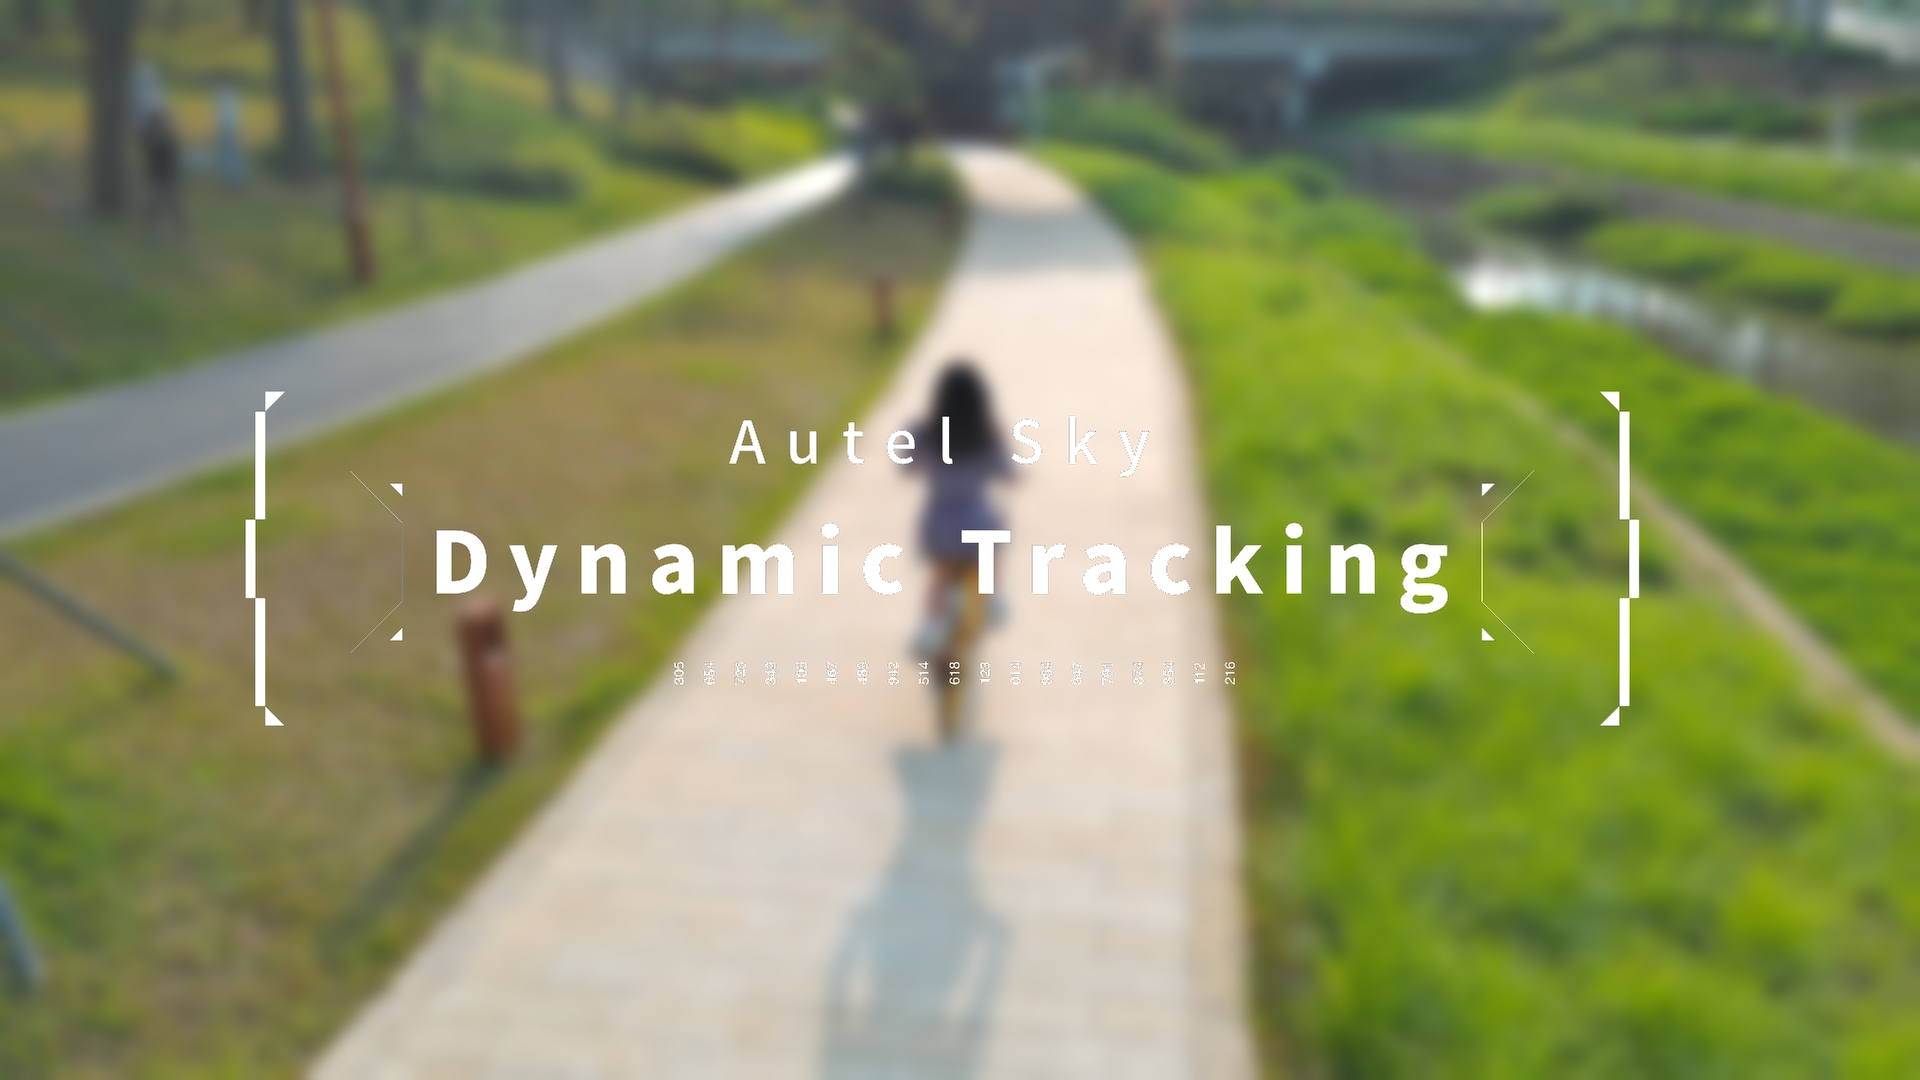 Autel Sky App - Dynamic Tracking